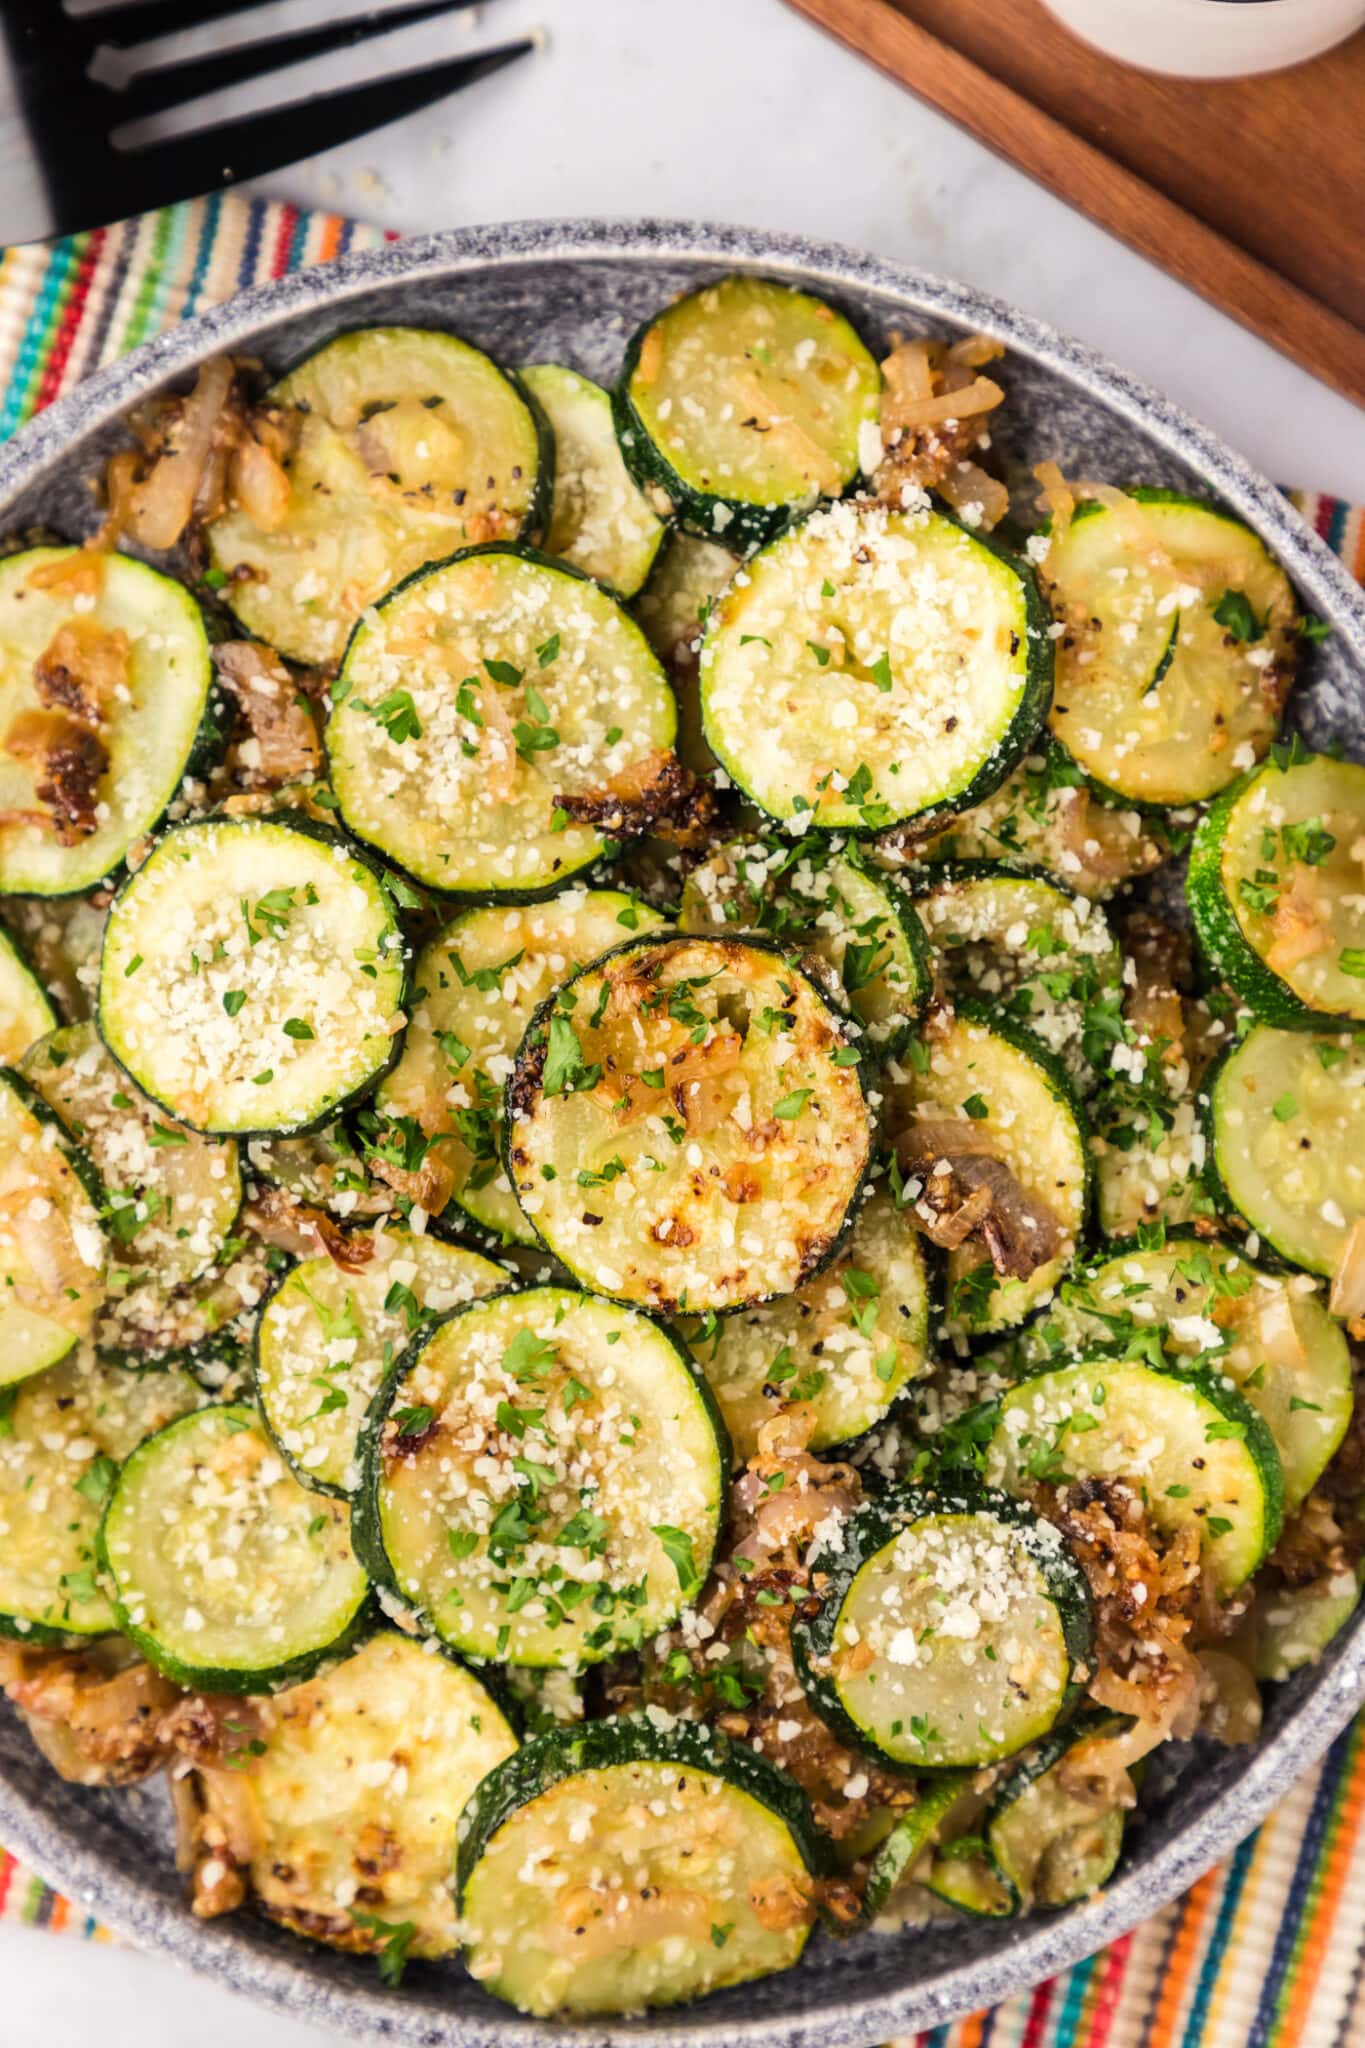 Sautéed Zucchini - Amanda's Cookin' - Vegetables